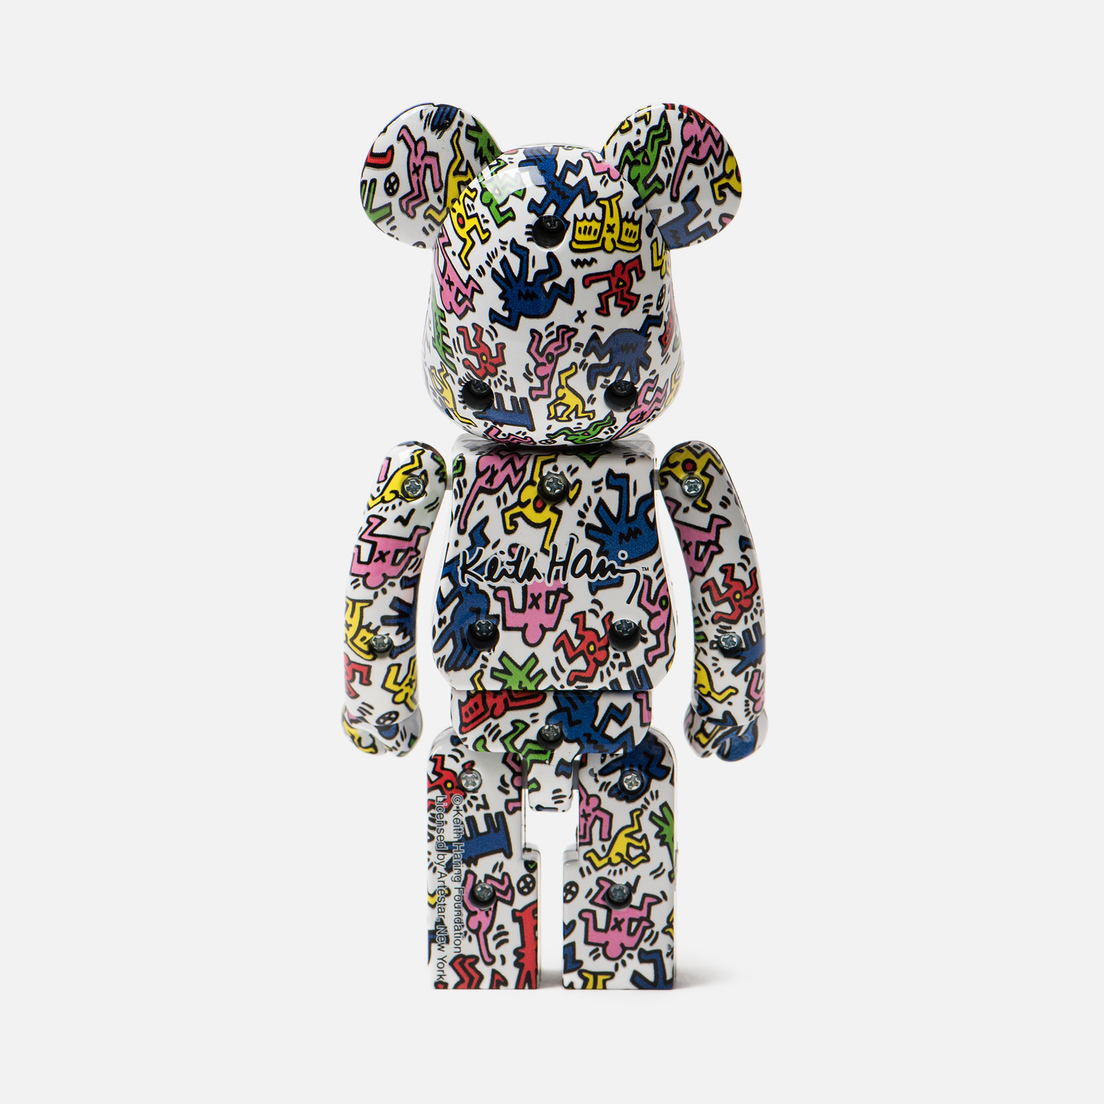 Medicom Toy Игрушка Super Alloyed Keith Haring 200%